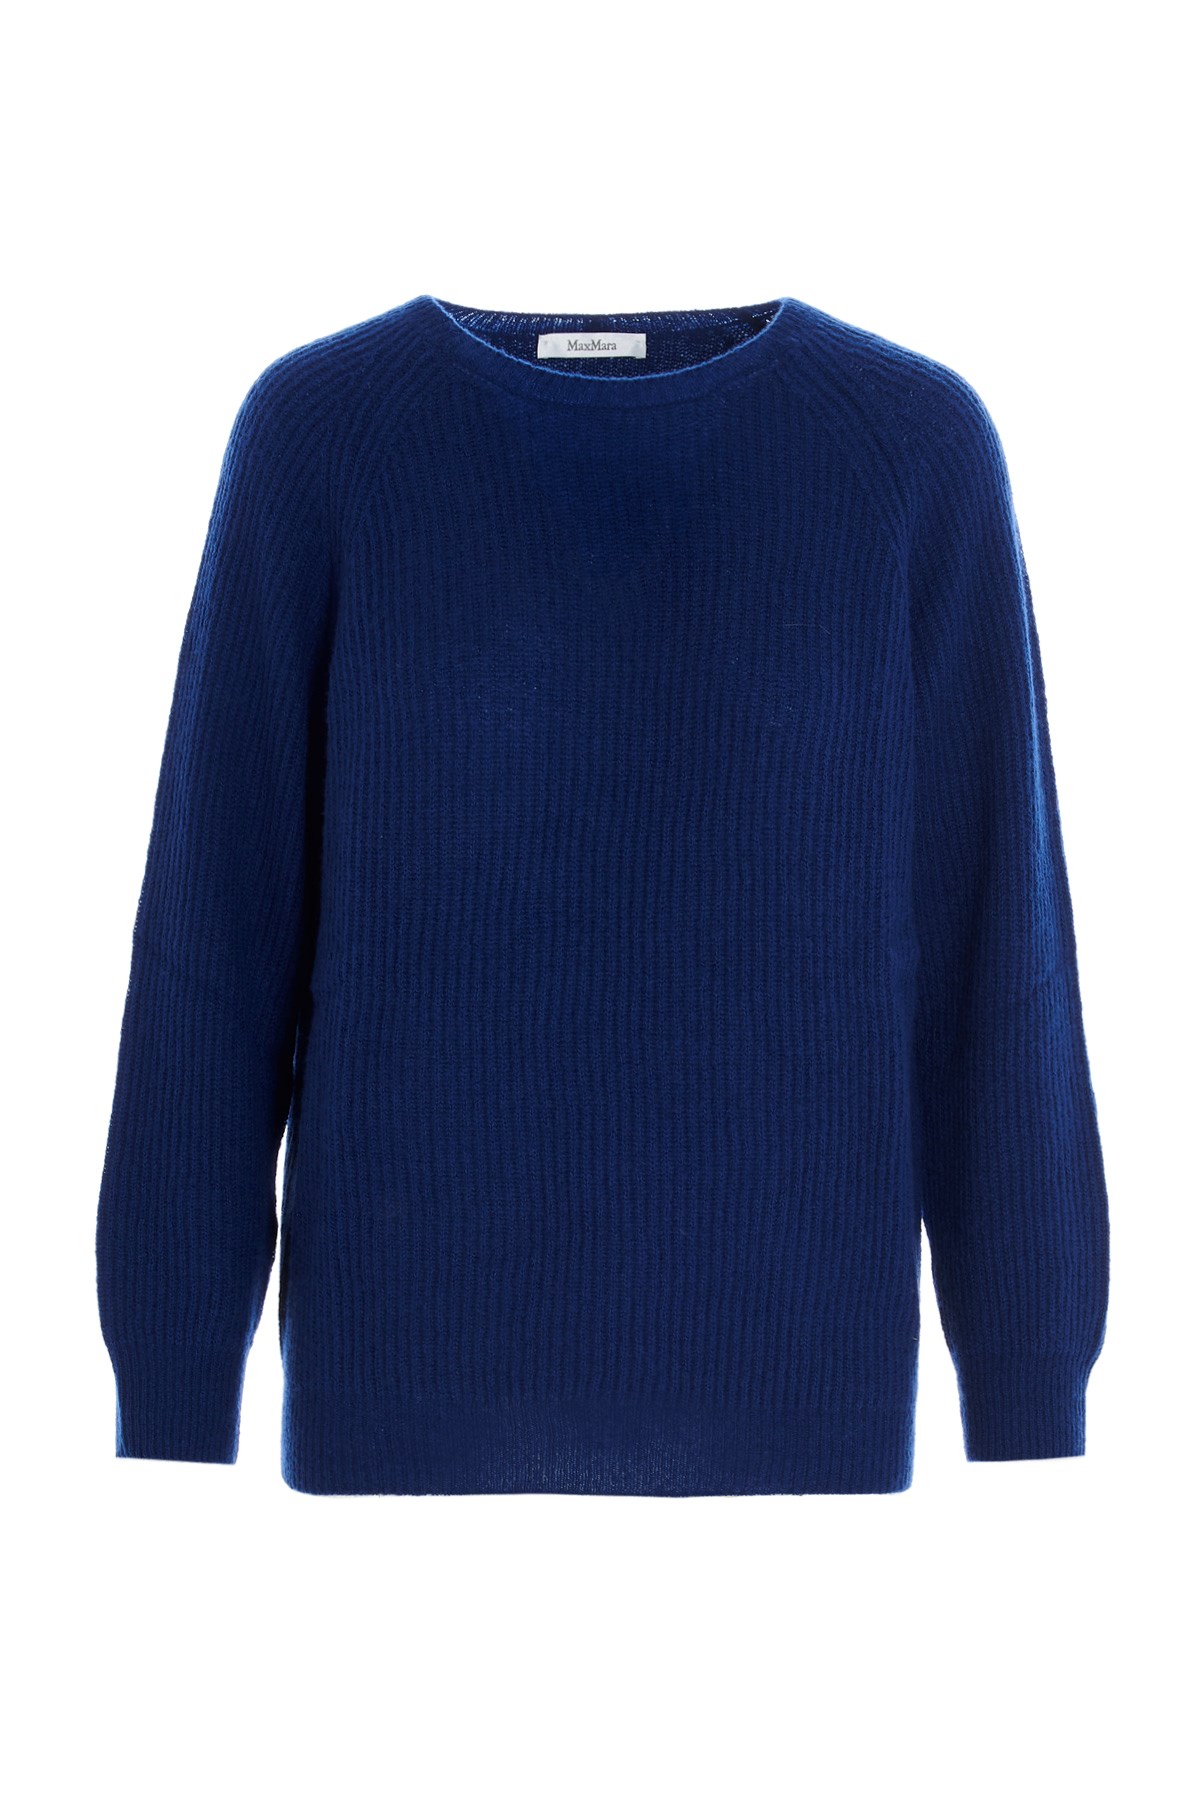 MAX MARA 'Bouquet' Casmere Sweater